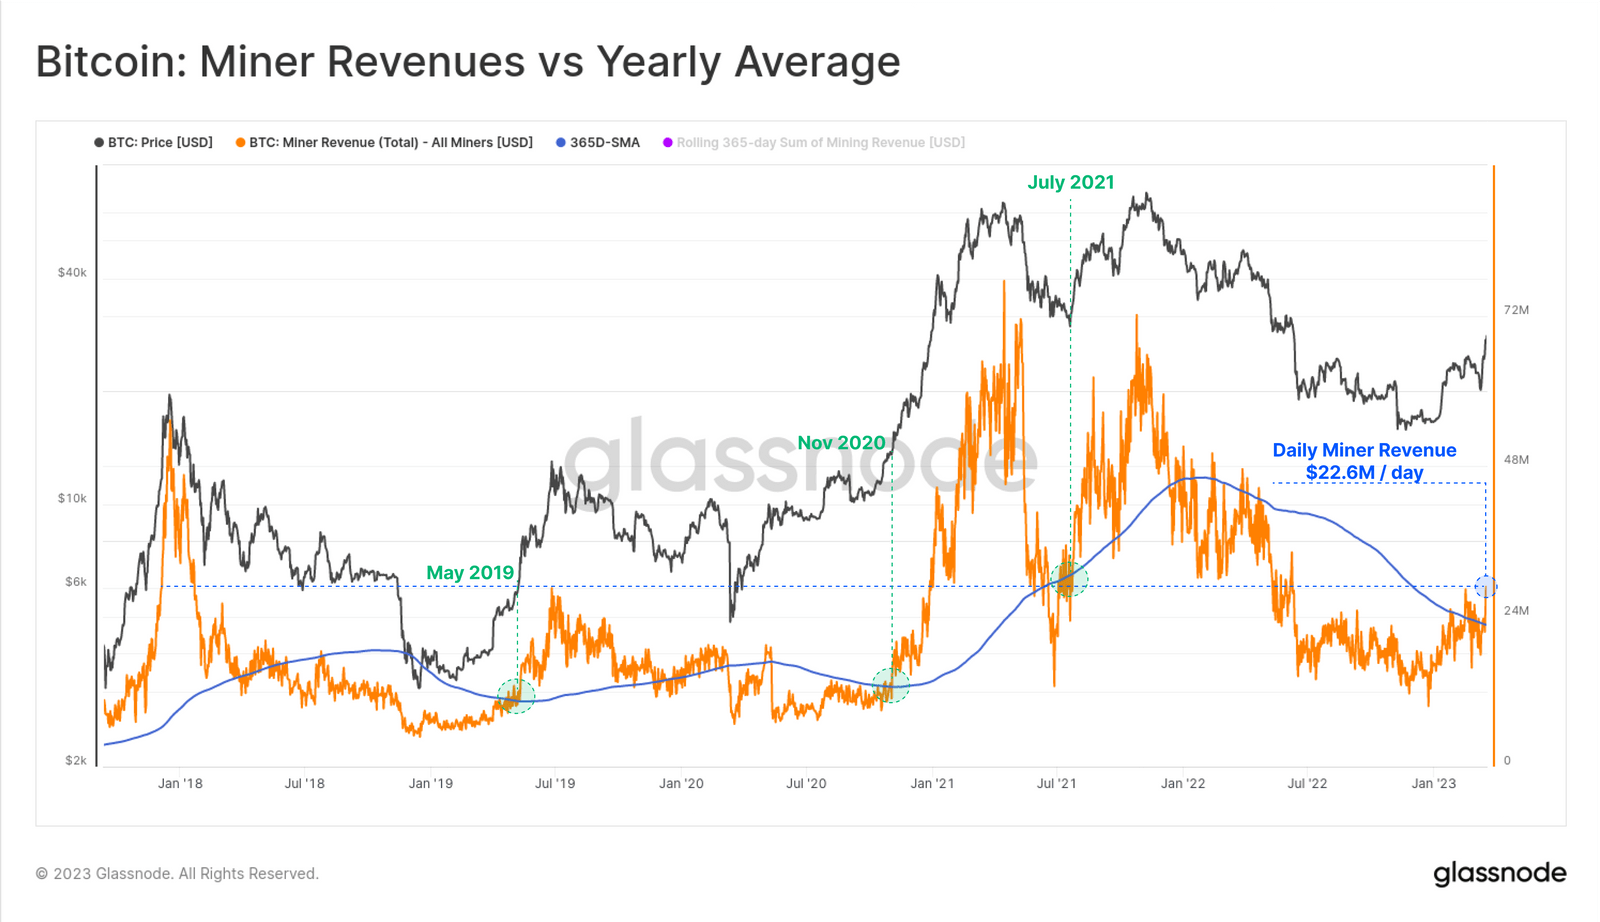 Bitcoin mining revenues versus yearly average